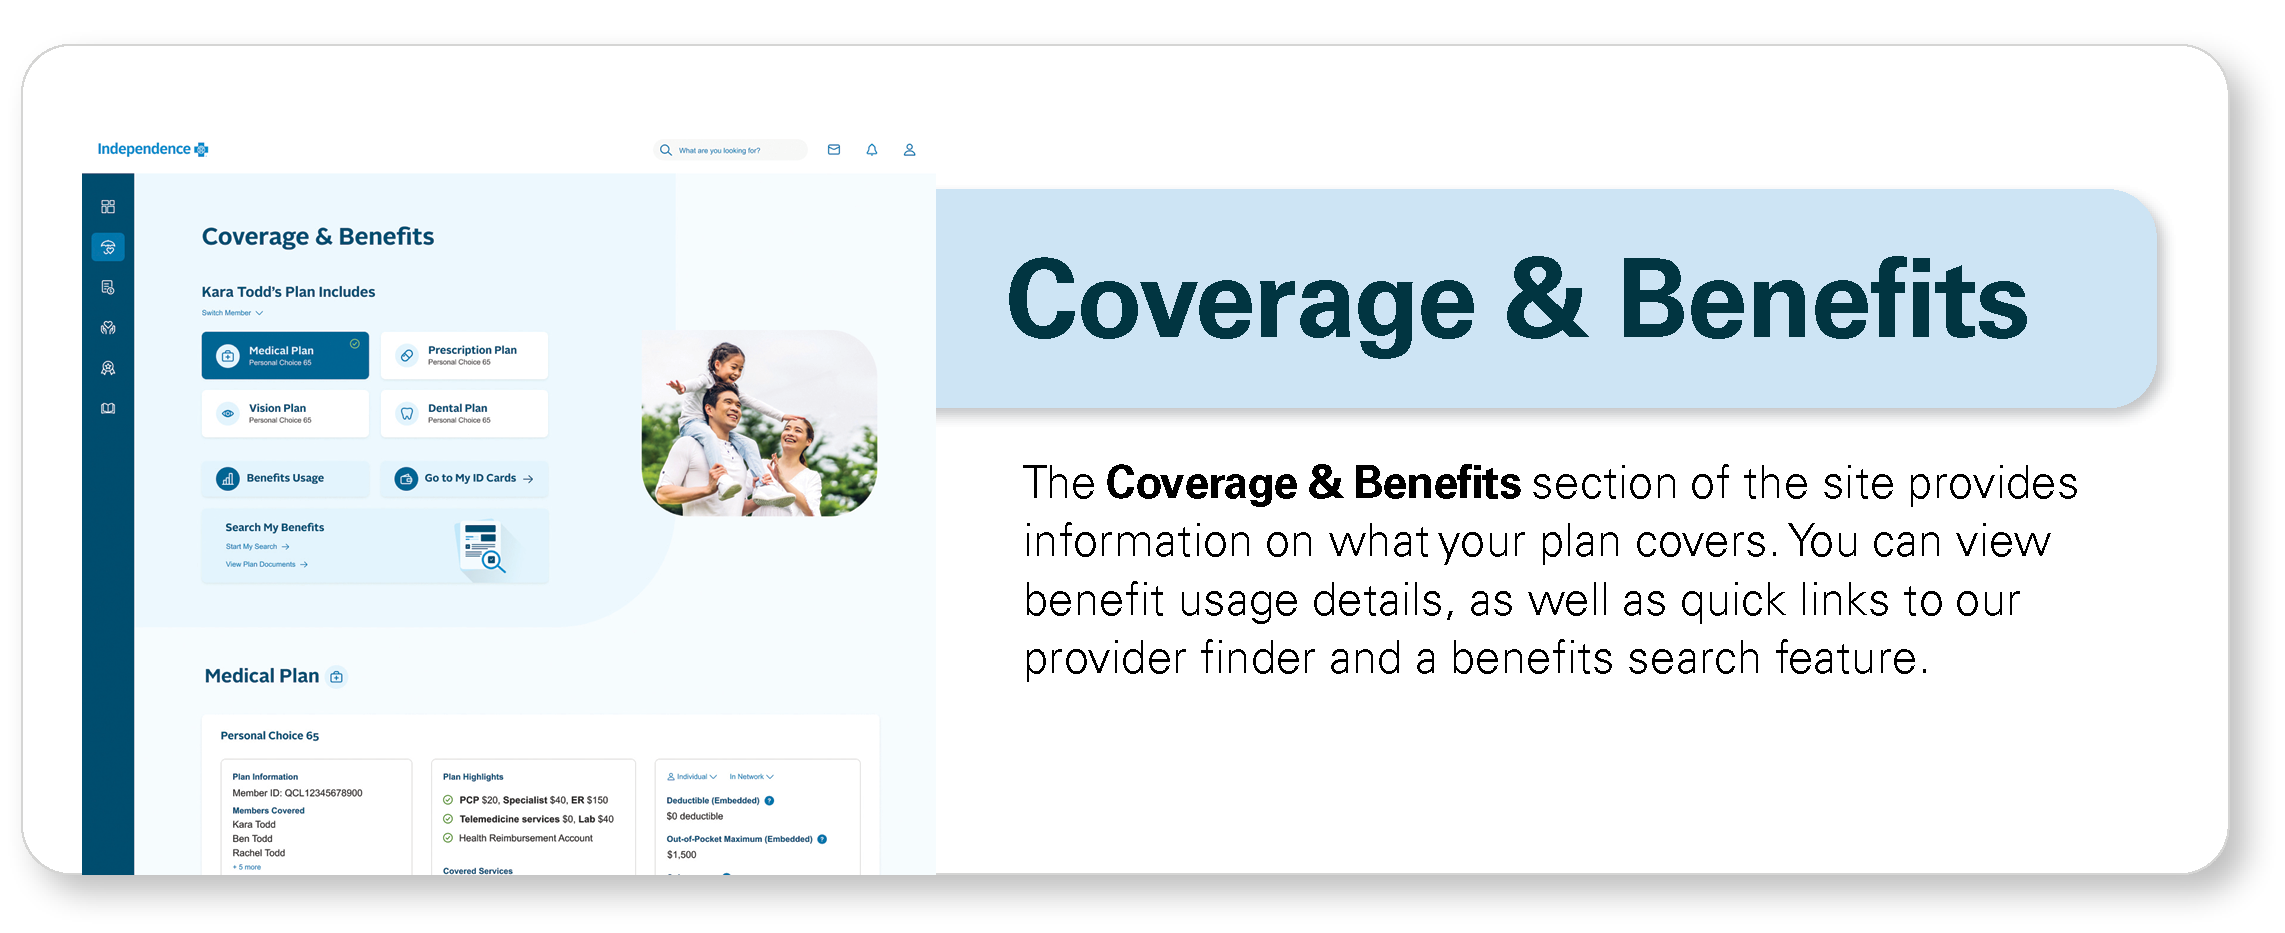 Coverage & Benefits infographic